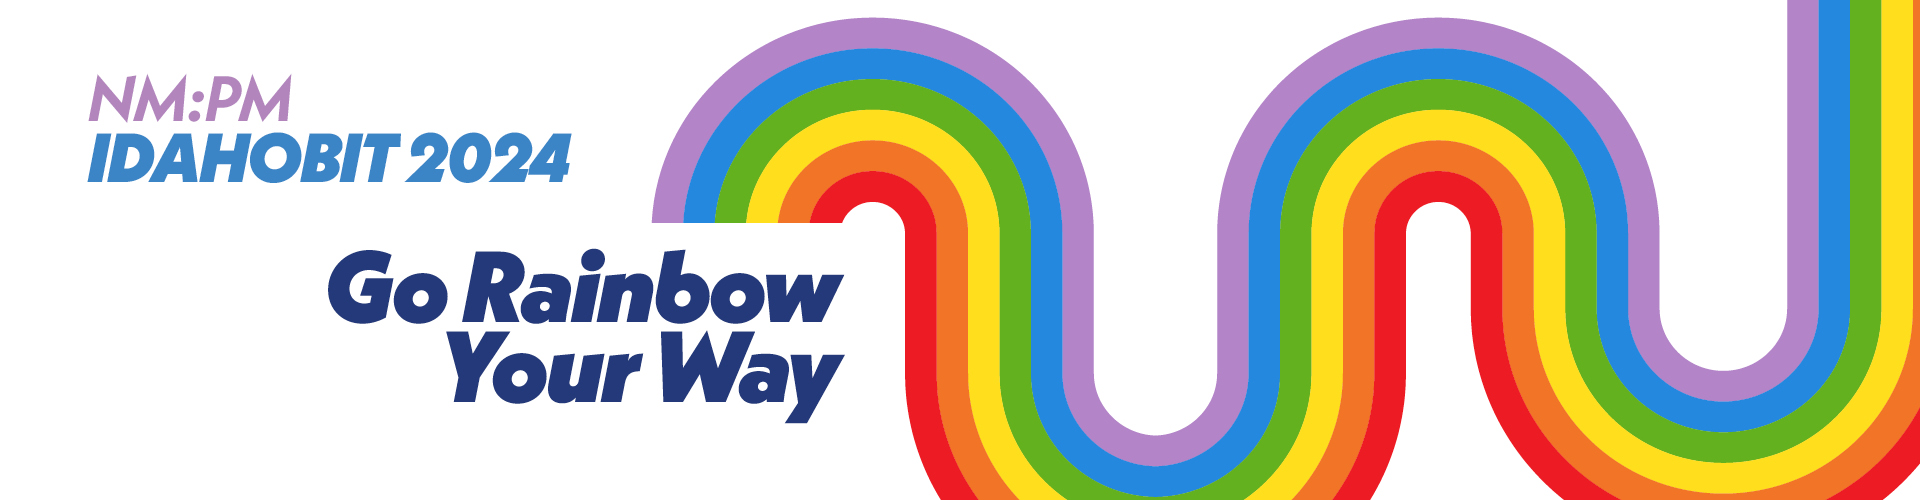 NM:PM Go Rainbow Your Way for IDAHOBIT